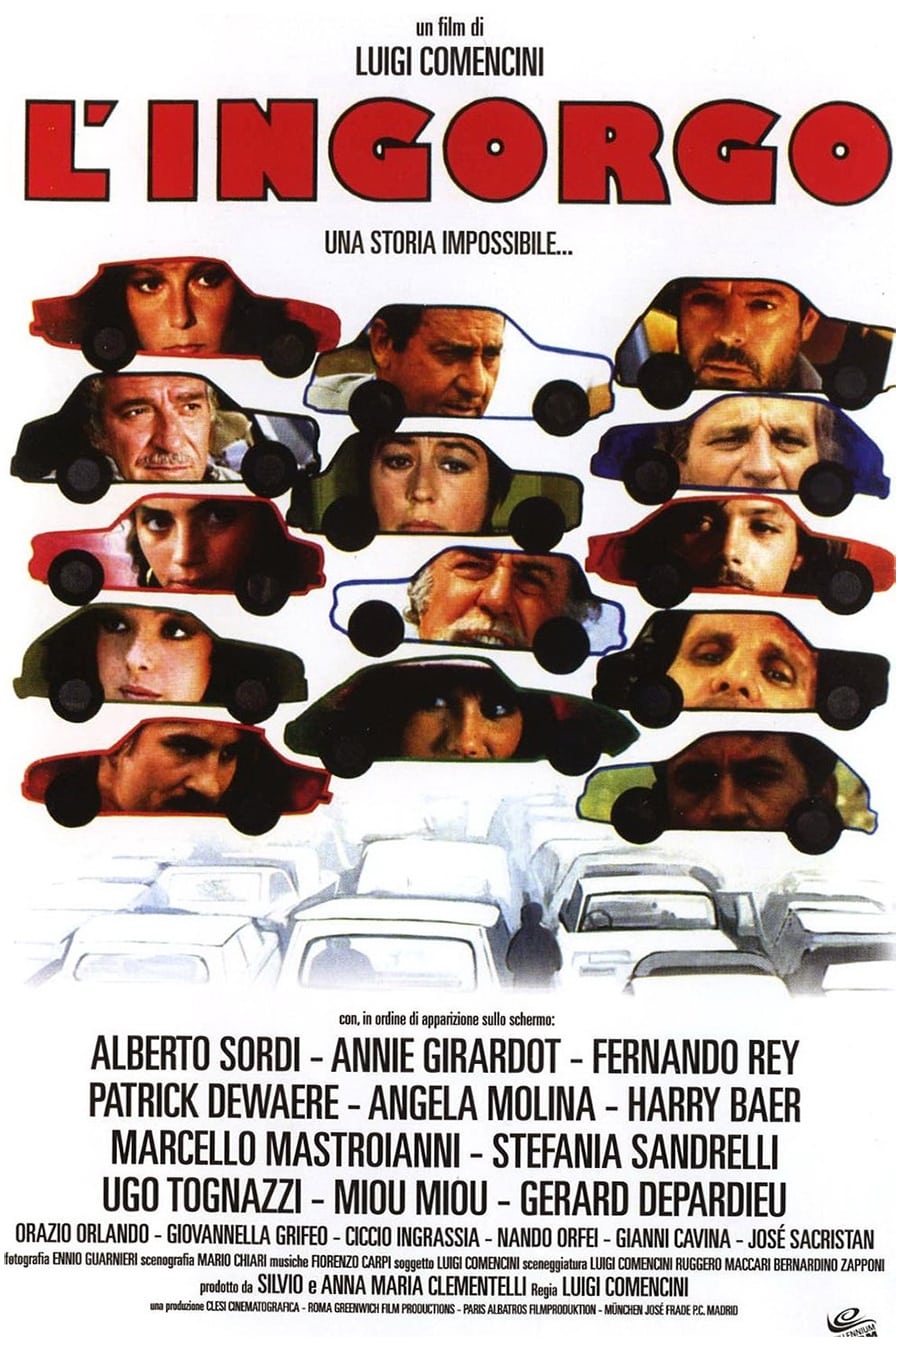 Traffic Jam (1979)